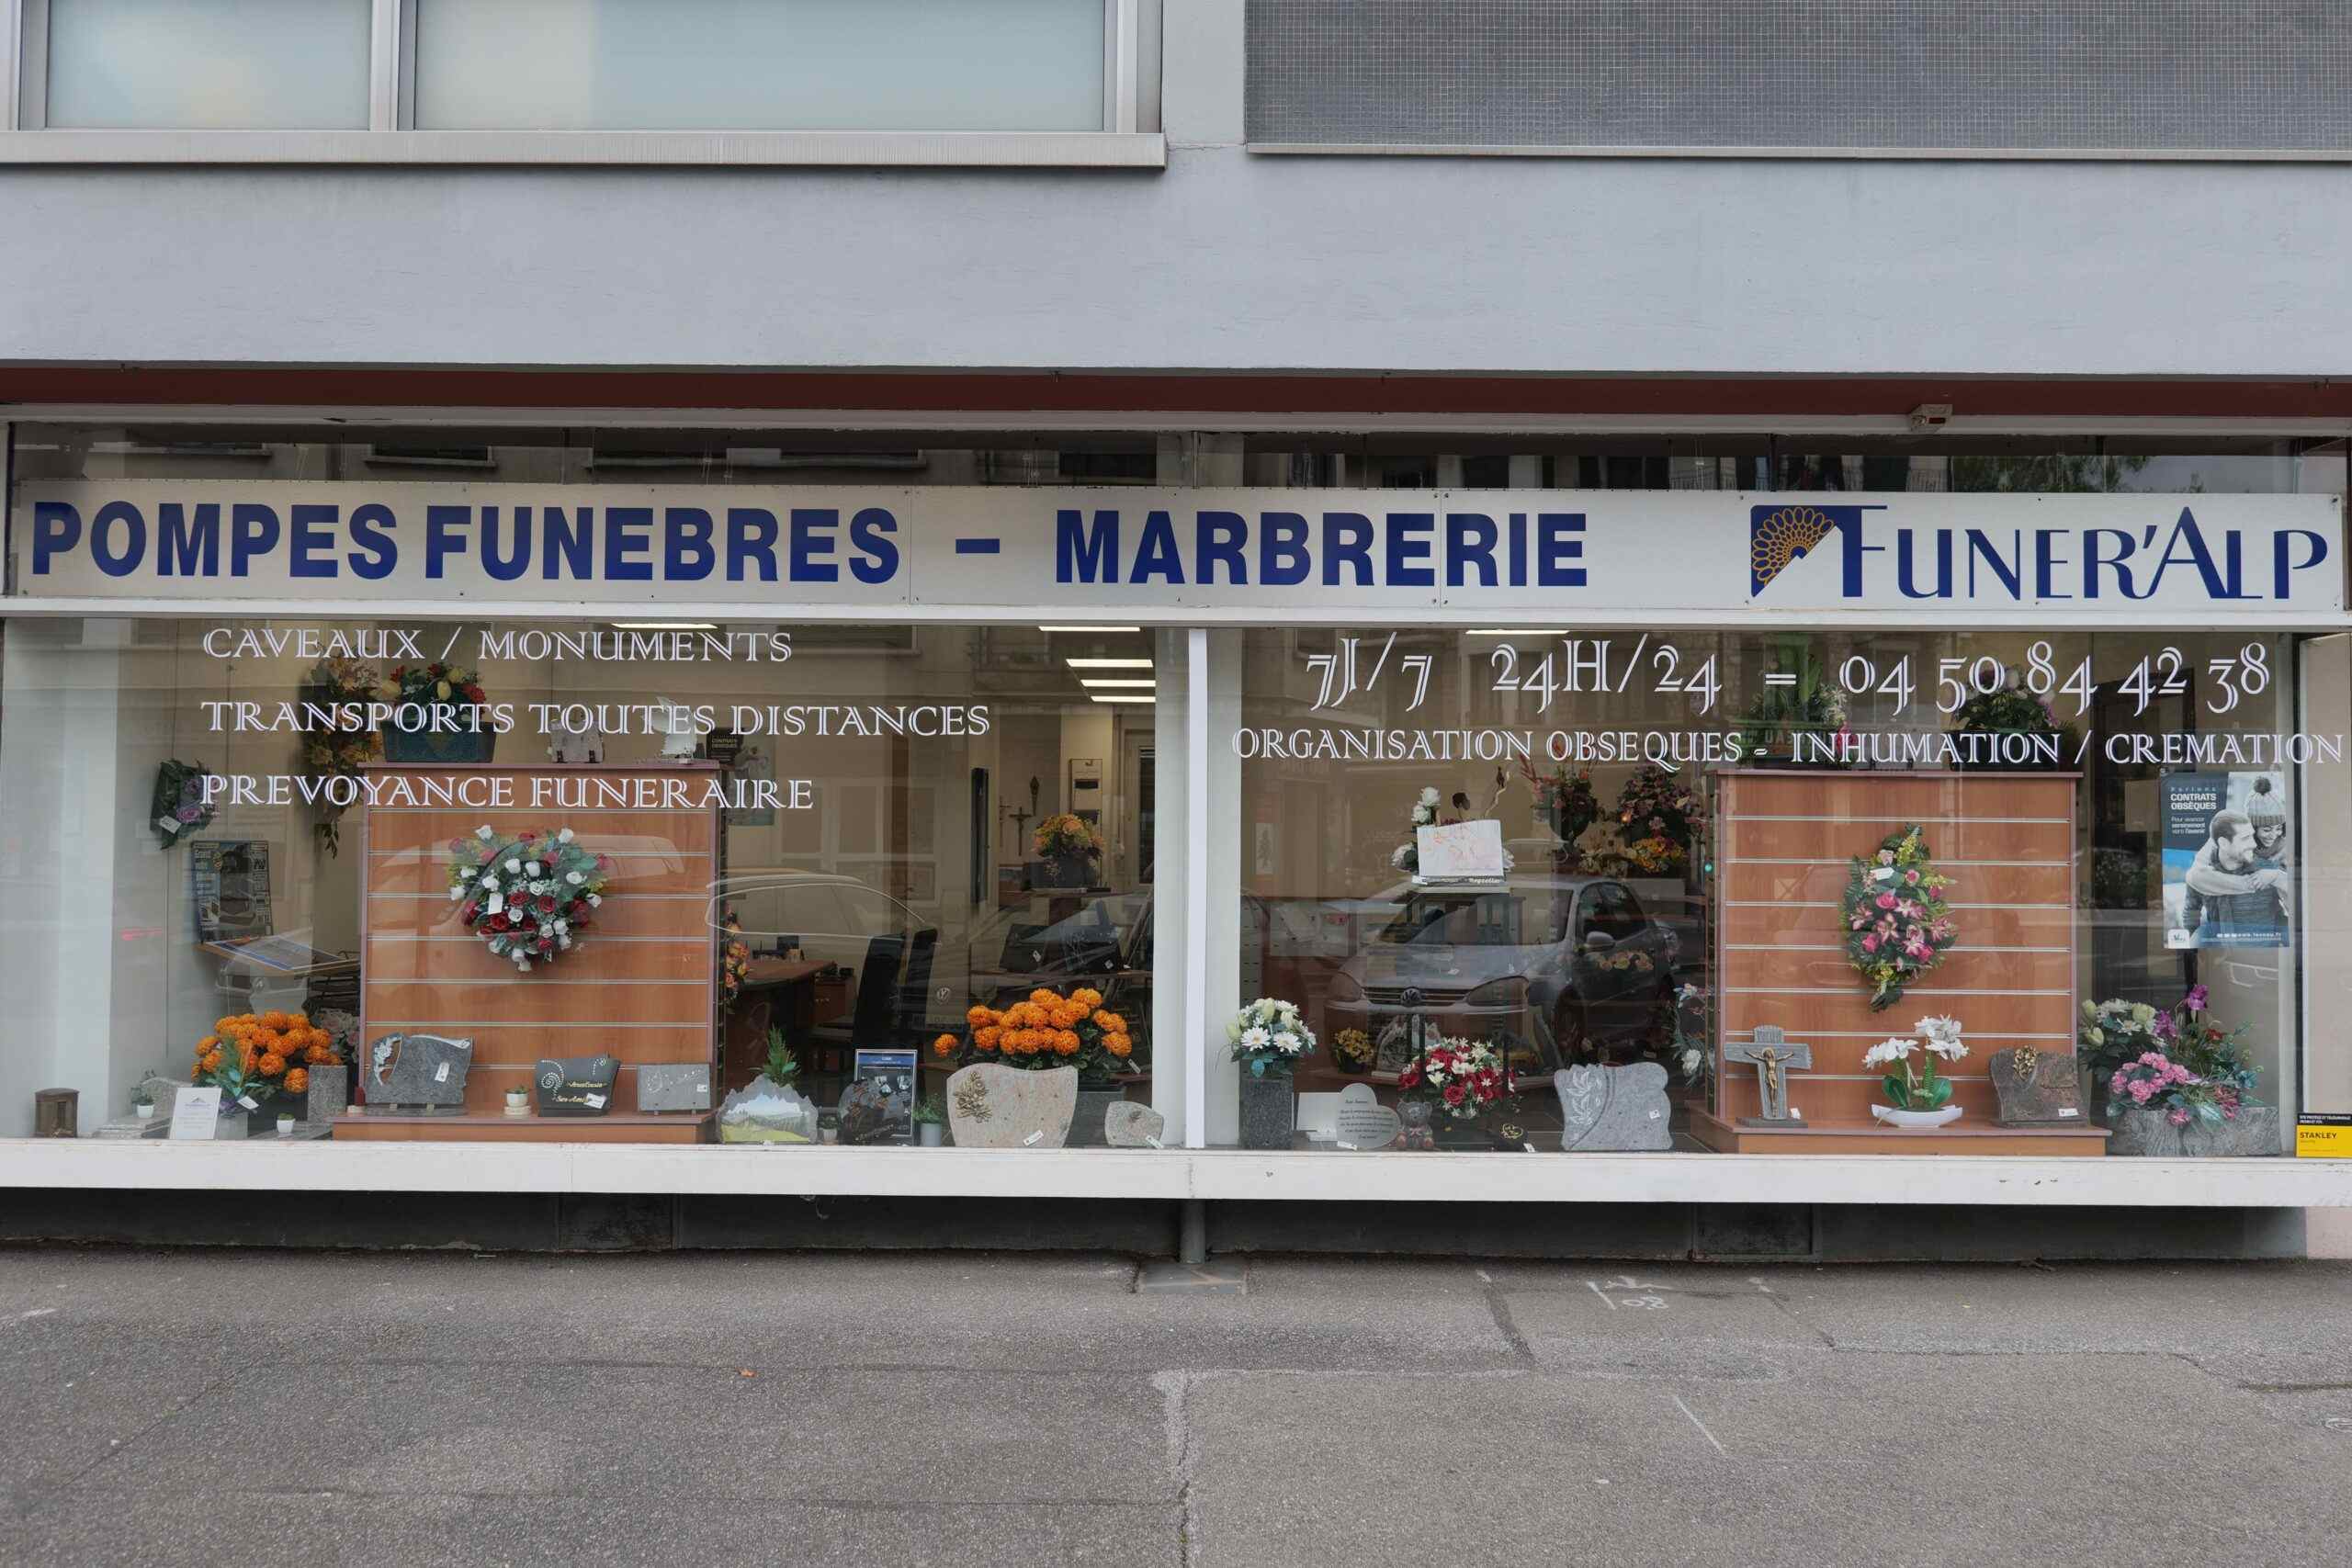 Photo - Pompes Funebres - Marbrerie Funeralp - Annemasse